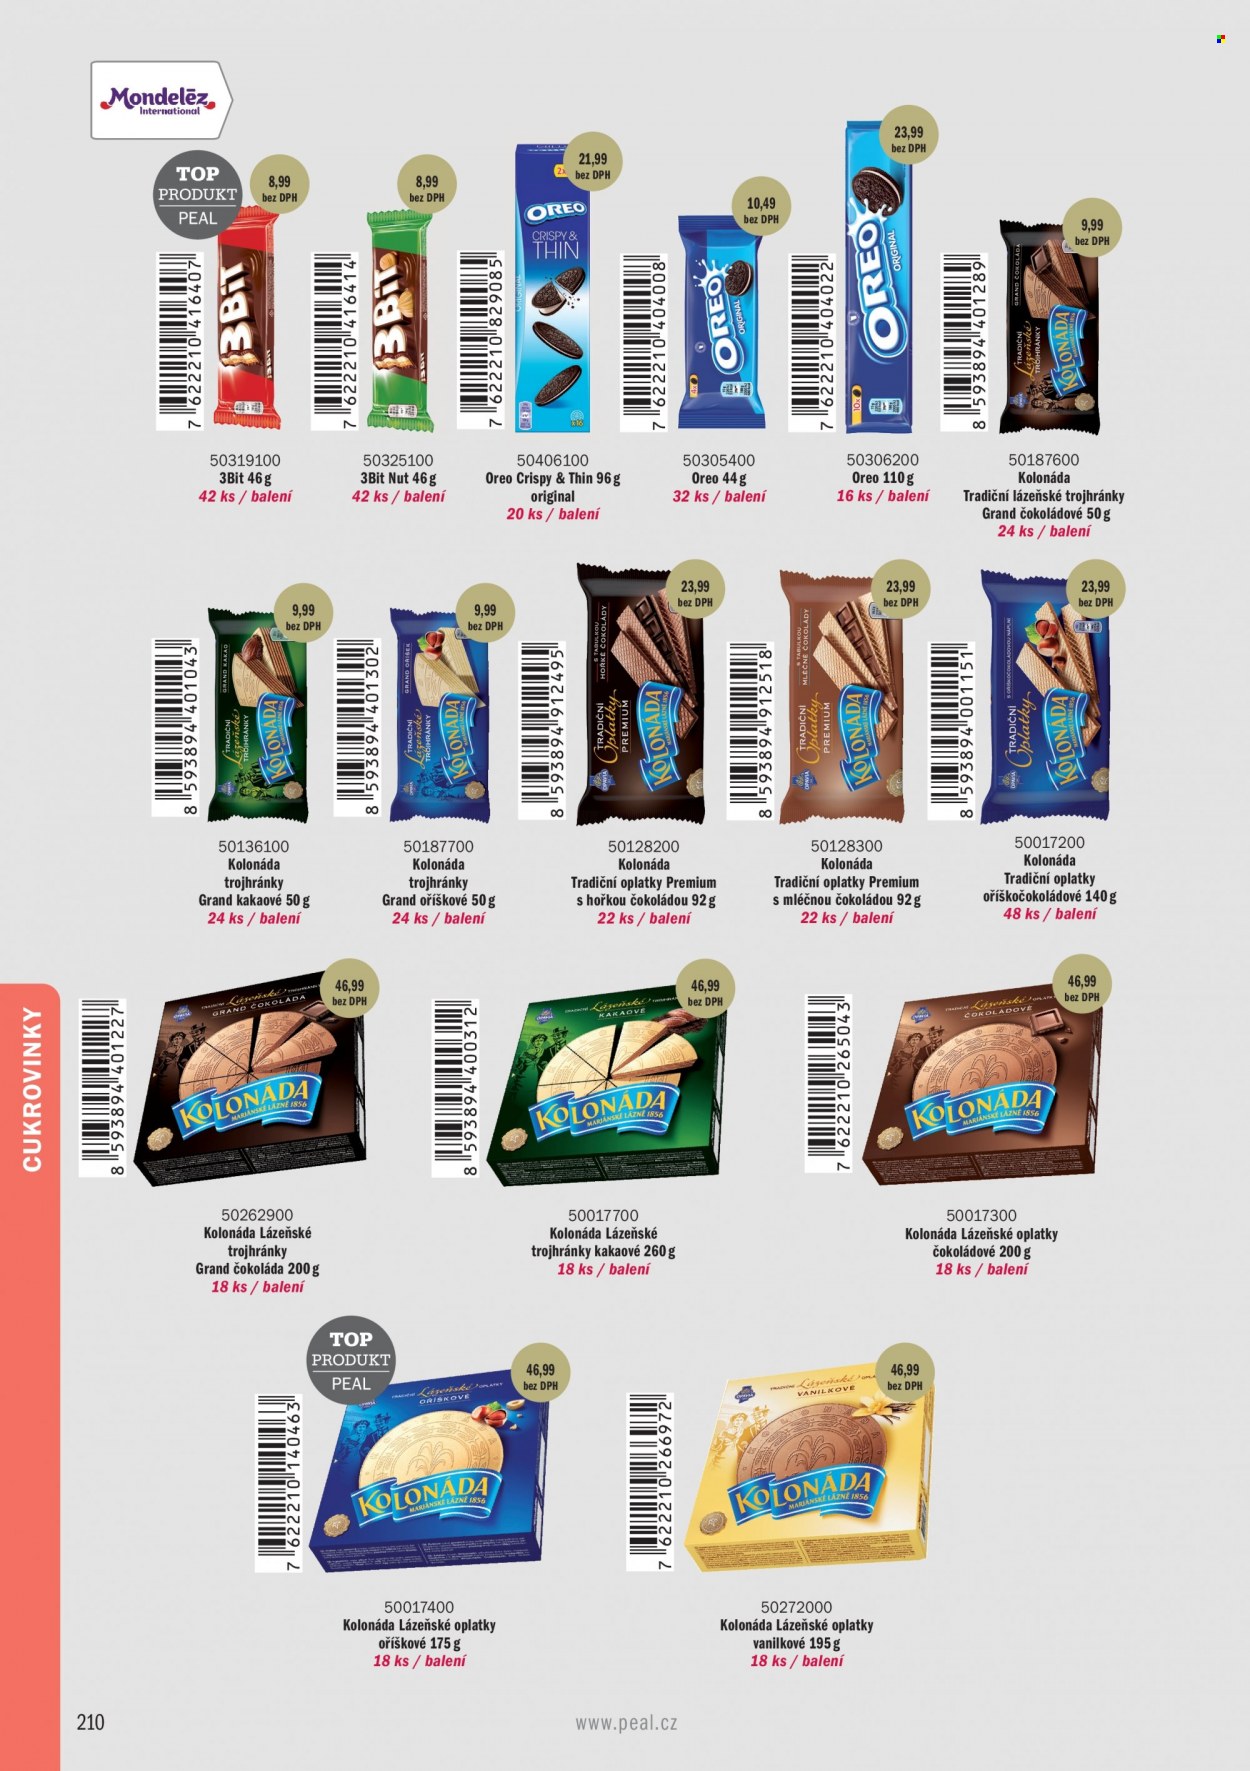 Leták PEAL - Produkty v akci - oplatky, bonbóny, sušenky, trubičky, lízátko, žvýkačky, bonboniéra. Strana 1.